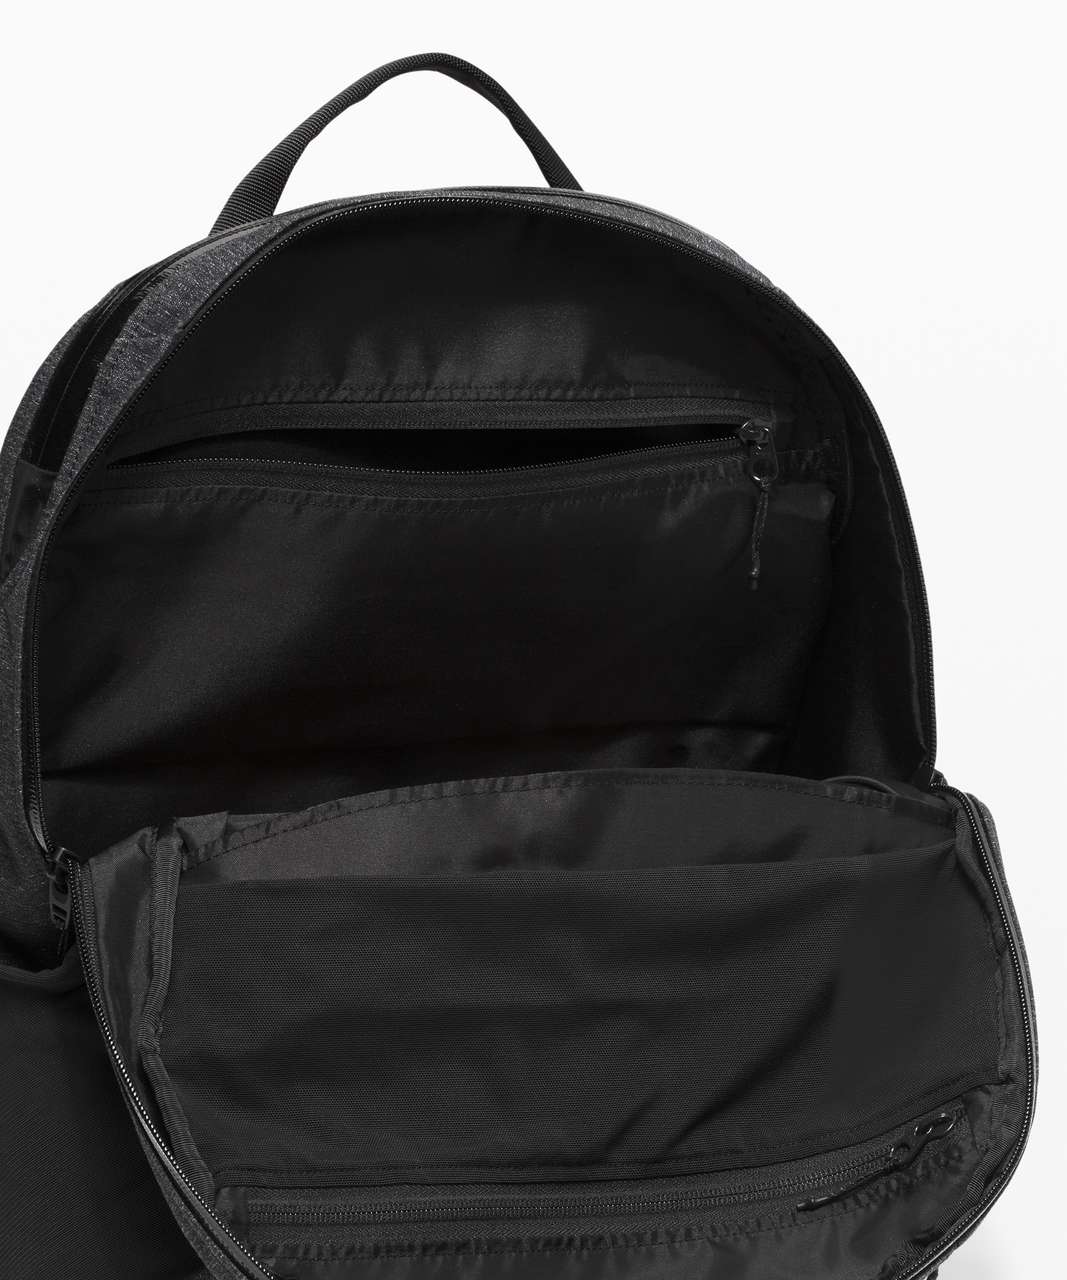 Lululemon Core Backpack 2.0 *20L - Heathered Black